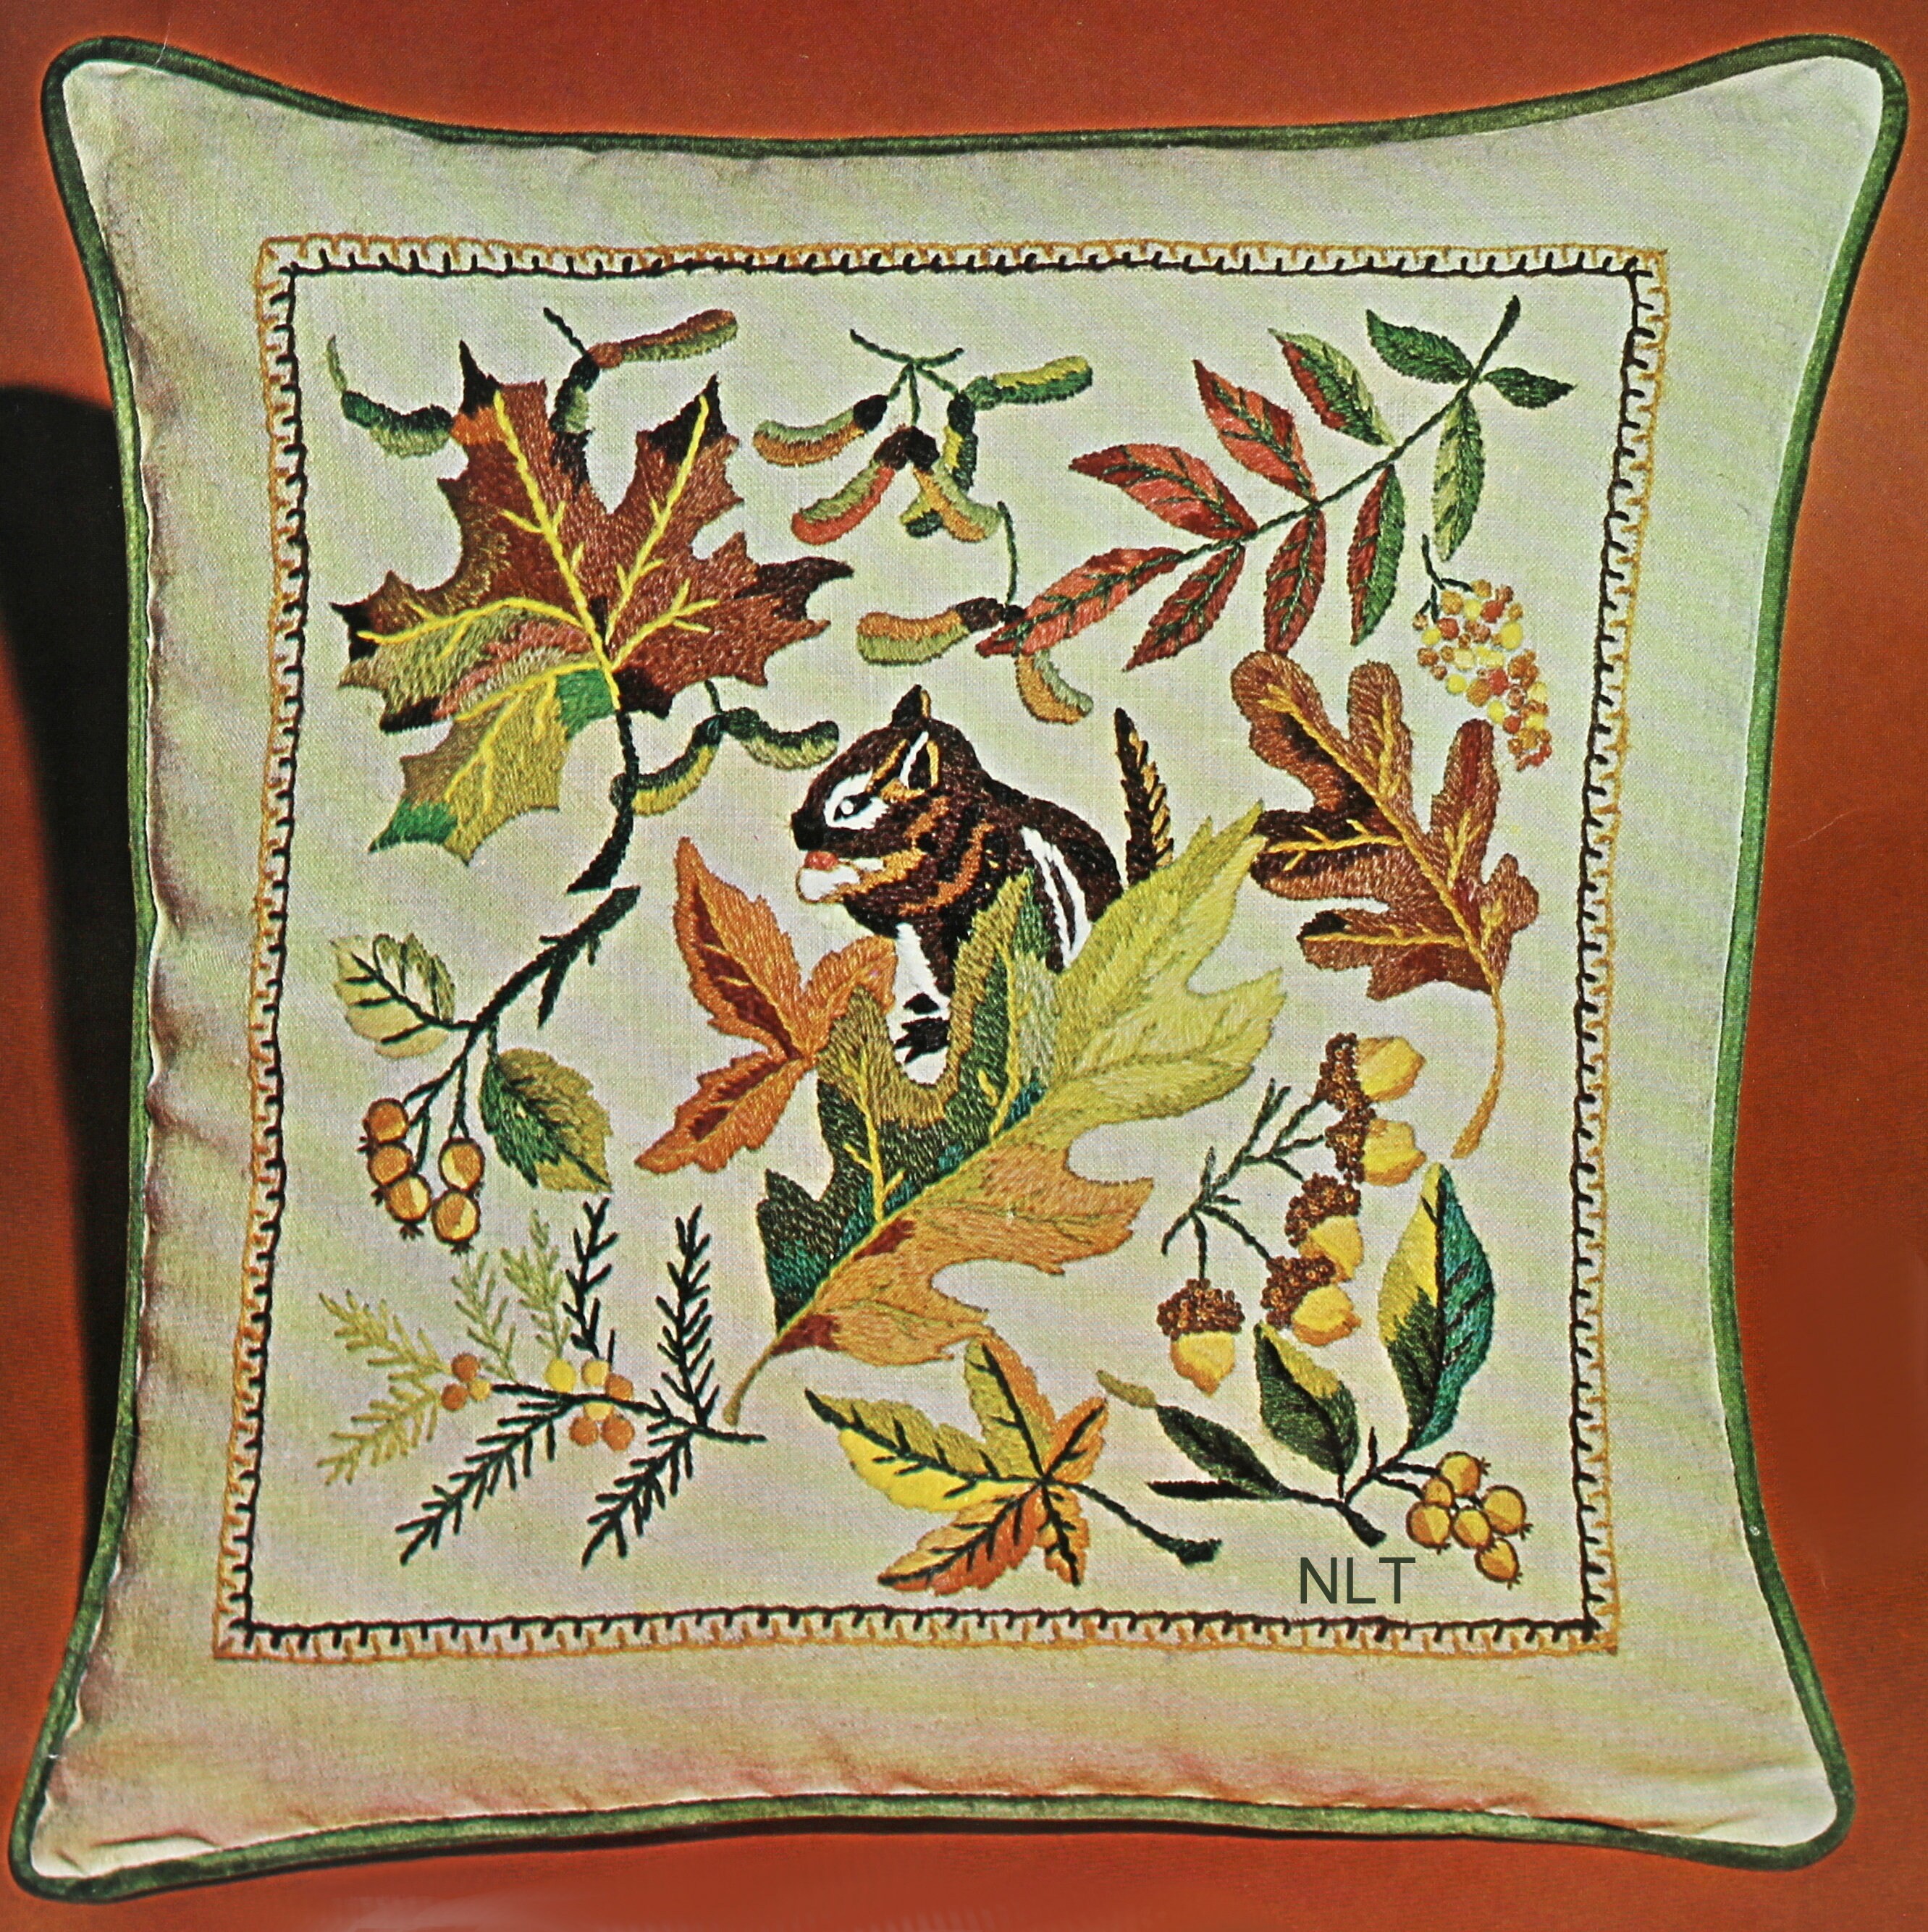 November Kitty CatEmbroidery Pillow Pattern